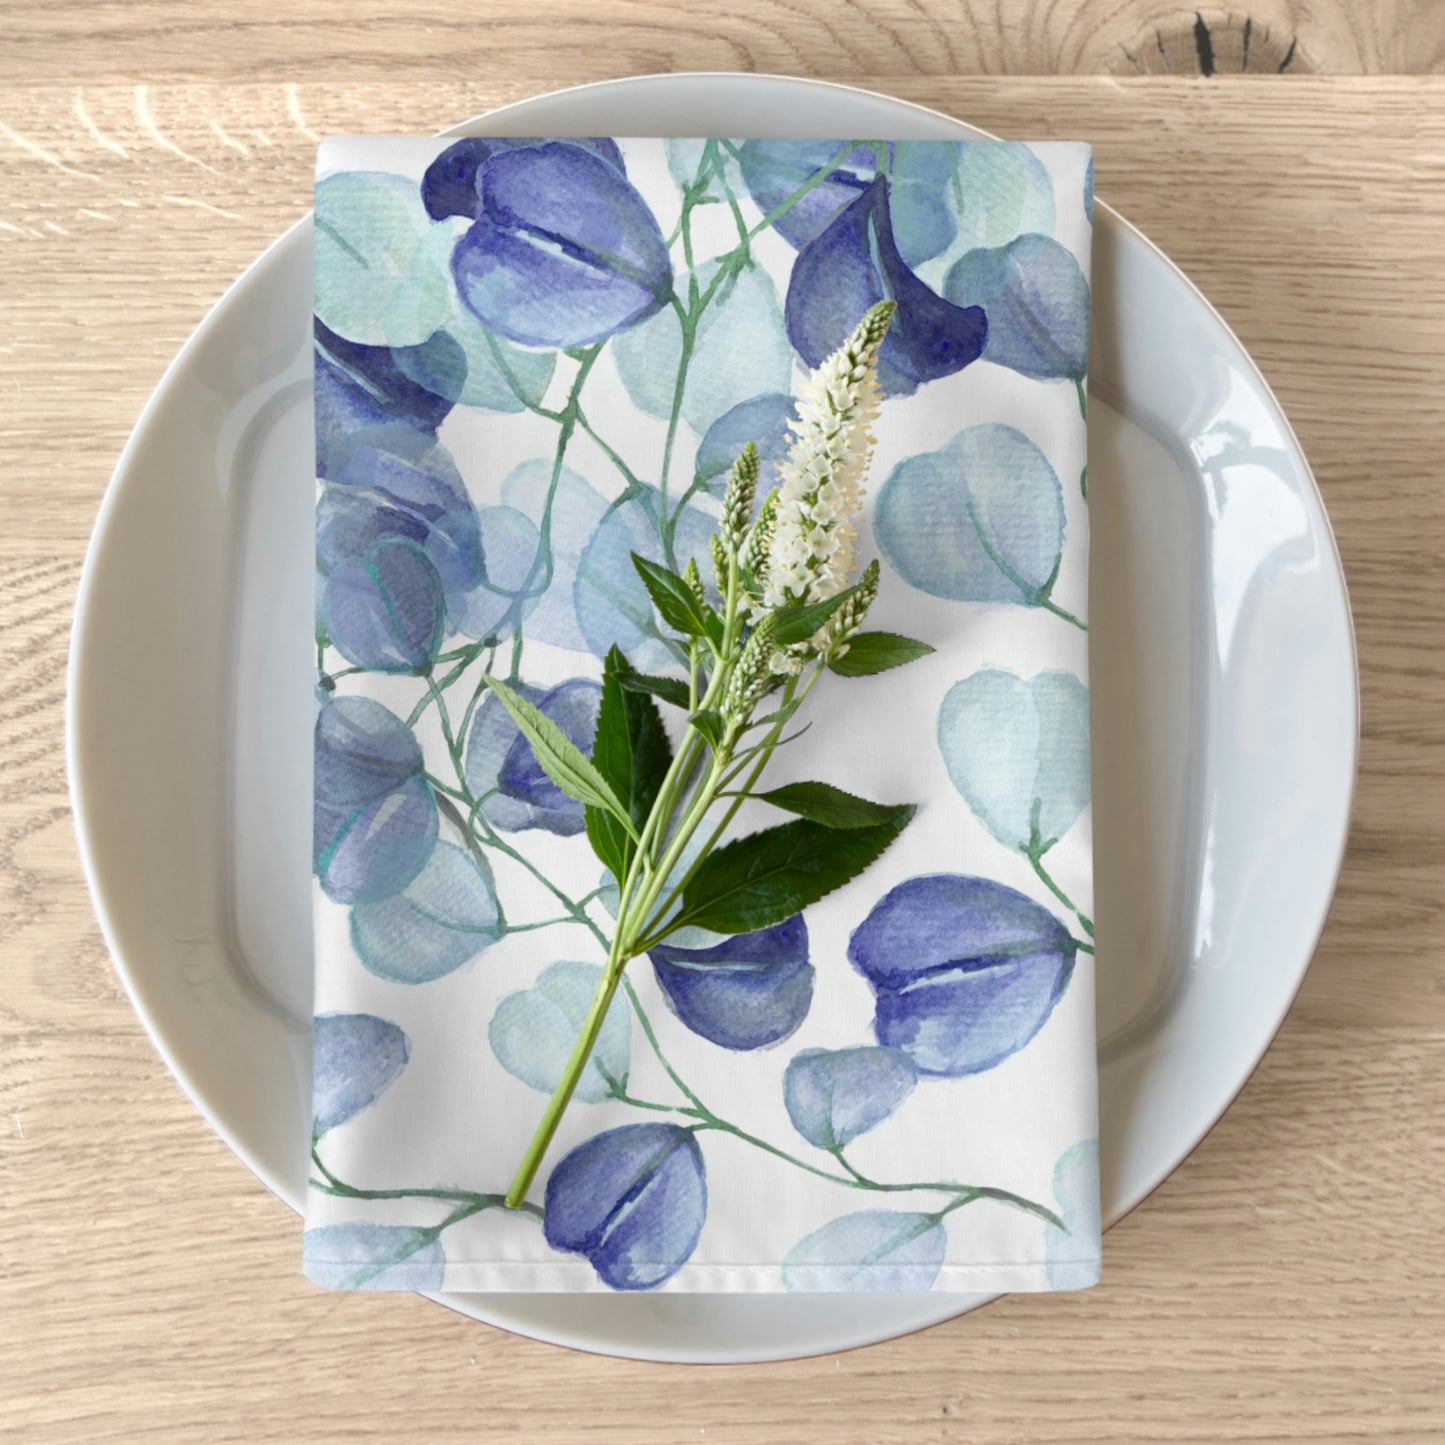 Blue Leaf Napkins / Blue Table Decor / Leaf Decor